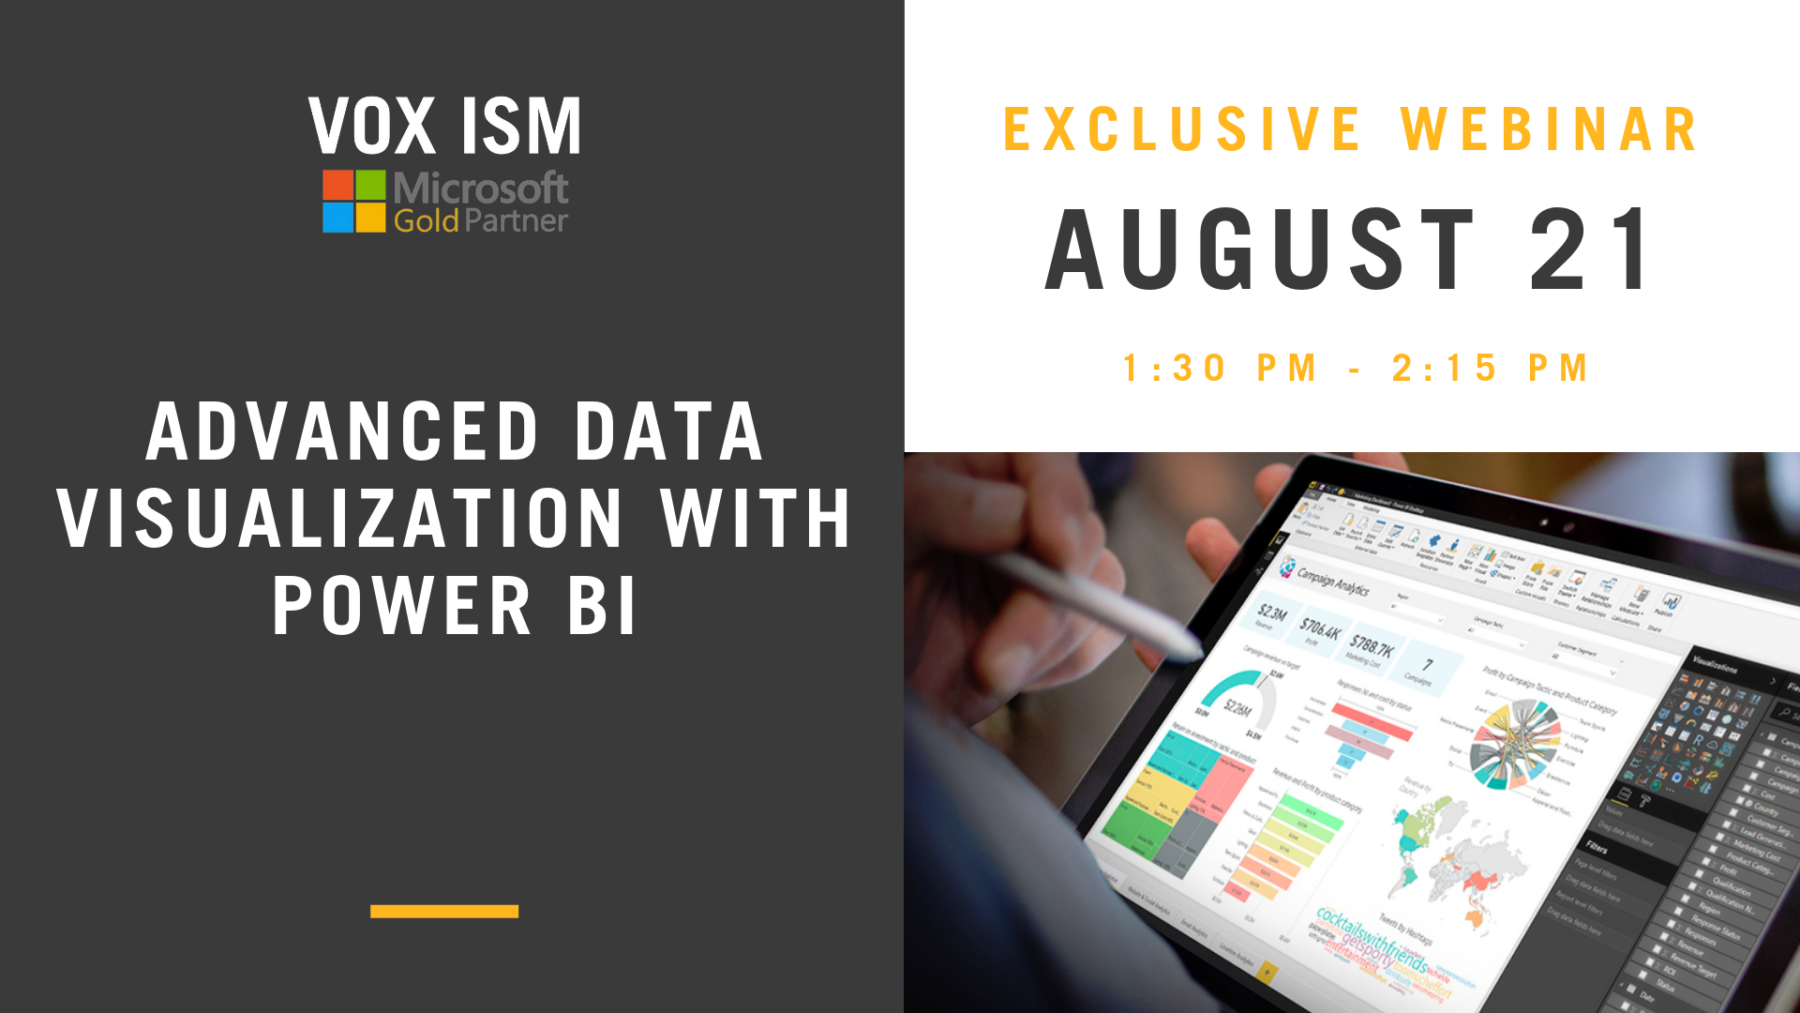 Advanced Data Visualization with Power BI - August 21 - Webinar - VOX ISM